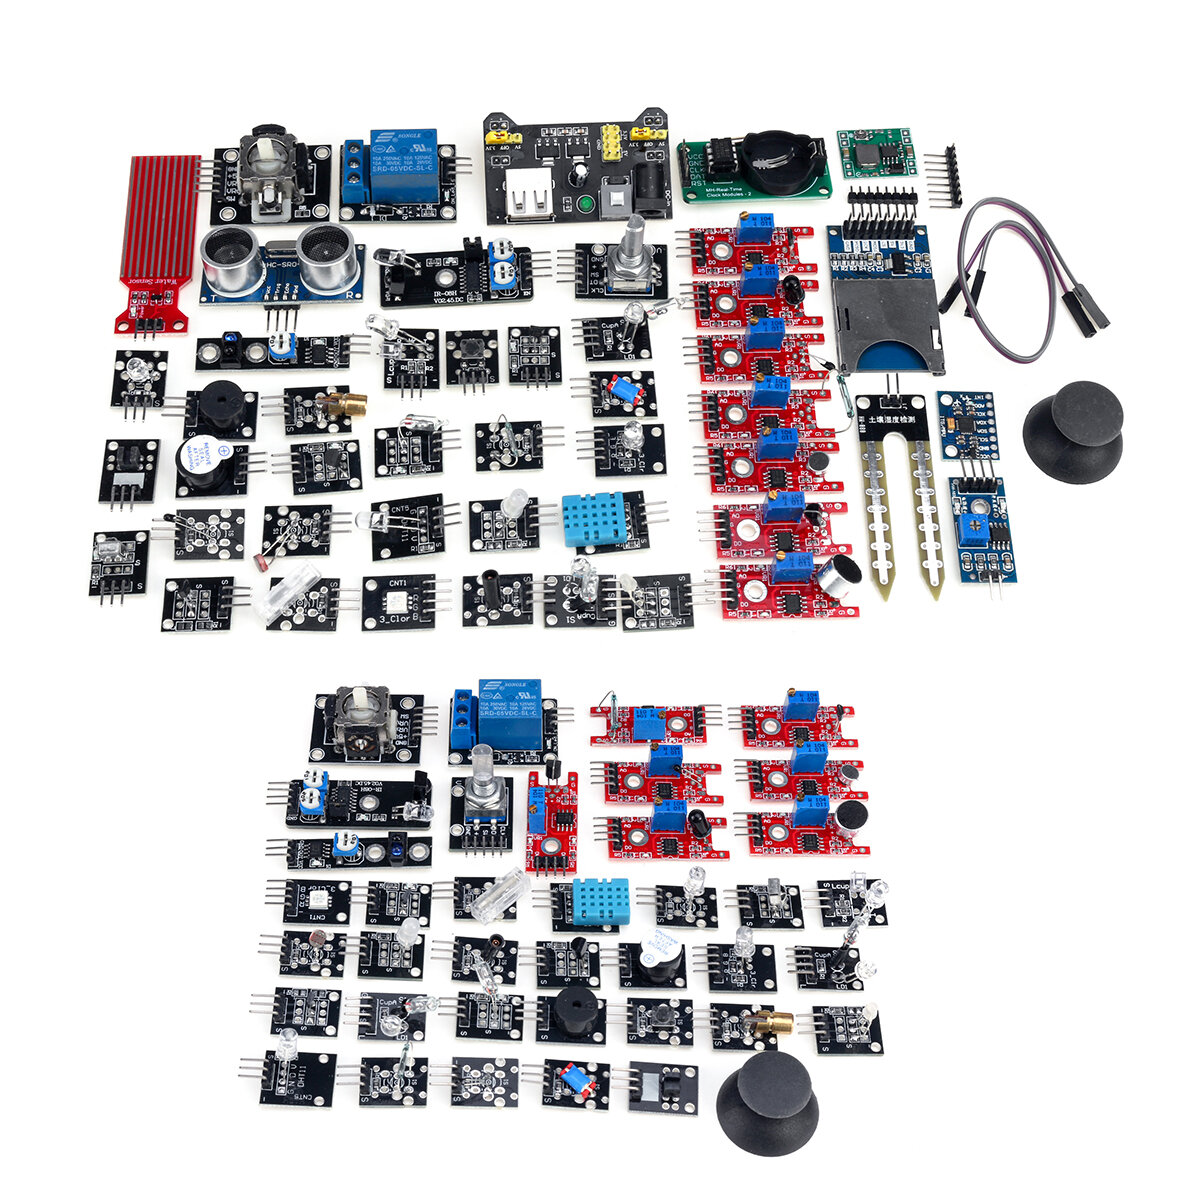 45 PULGADAS 1/37 PULGADAS 1 Sensor Conjunto de kits de inicio de módulo para Arduino Raspberry Pi Paquete educativo Bols